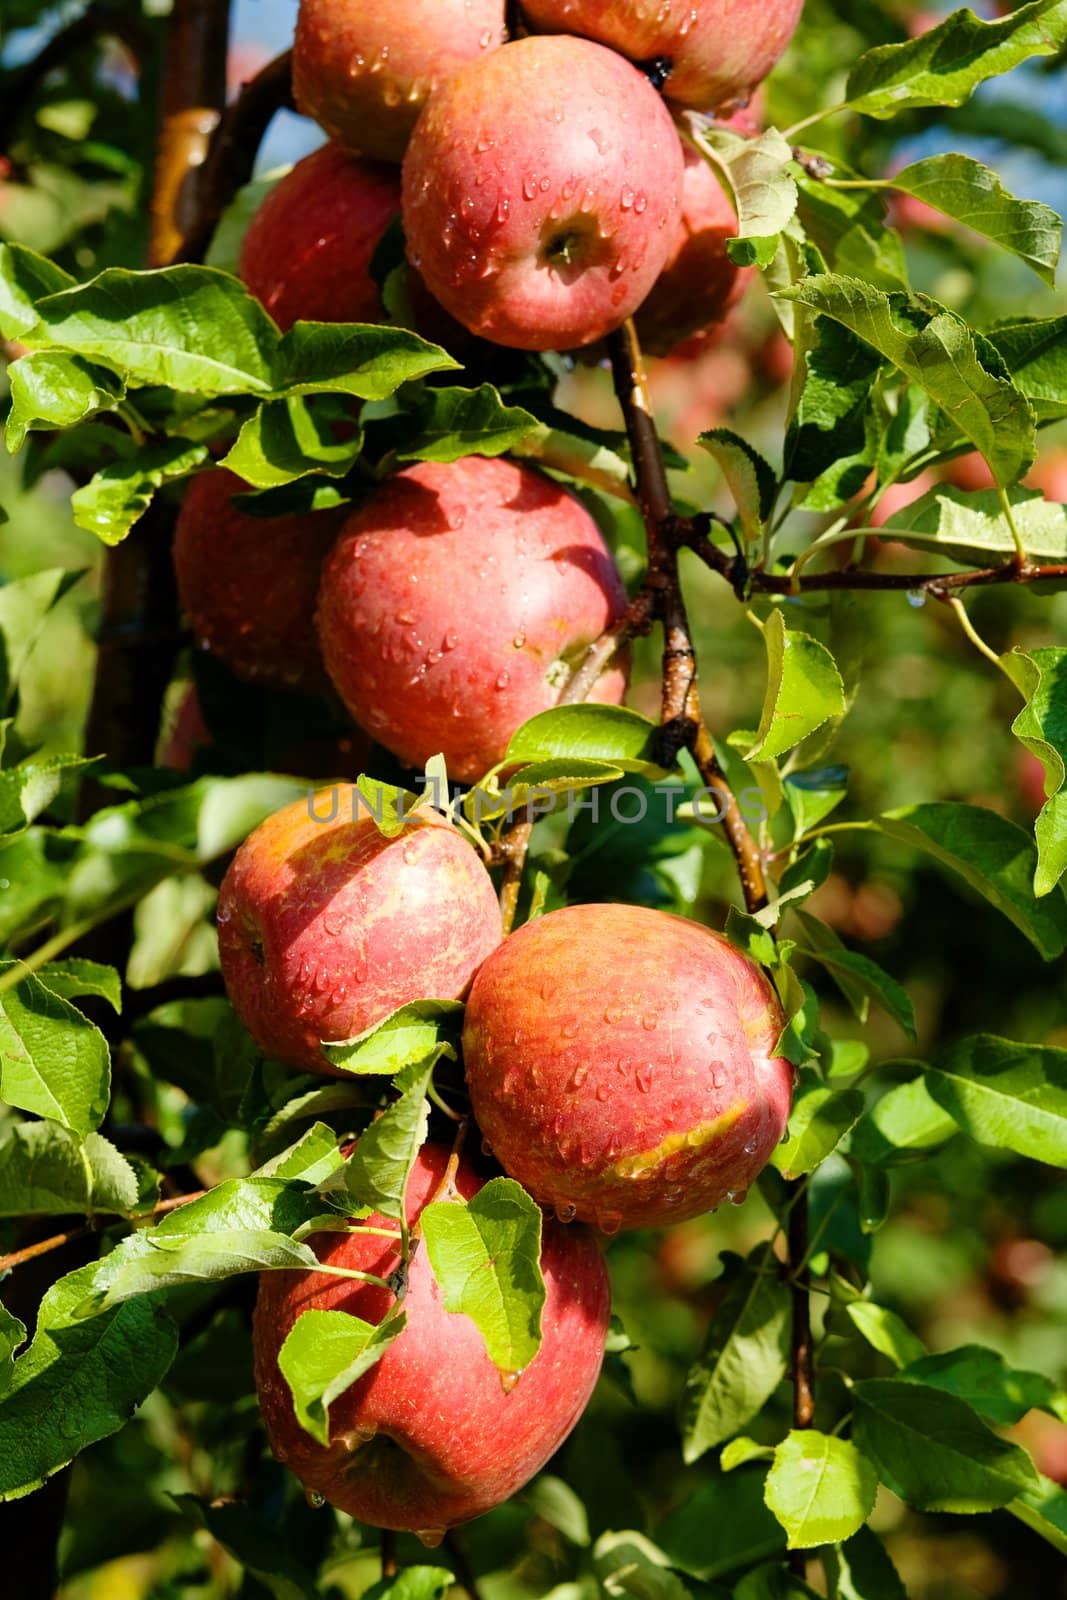 Group of apples by velkol